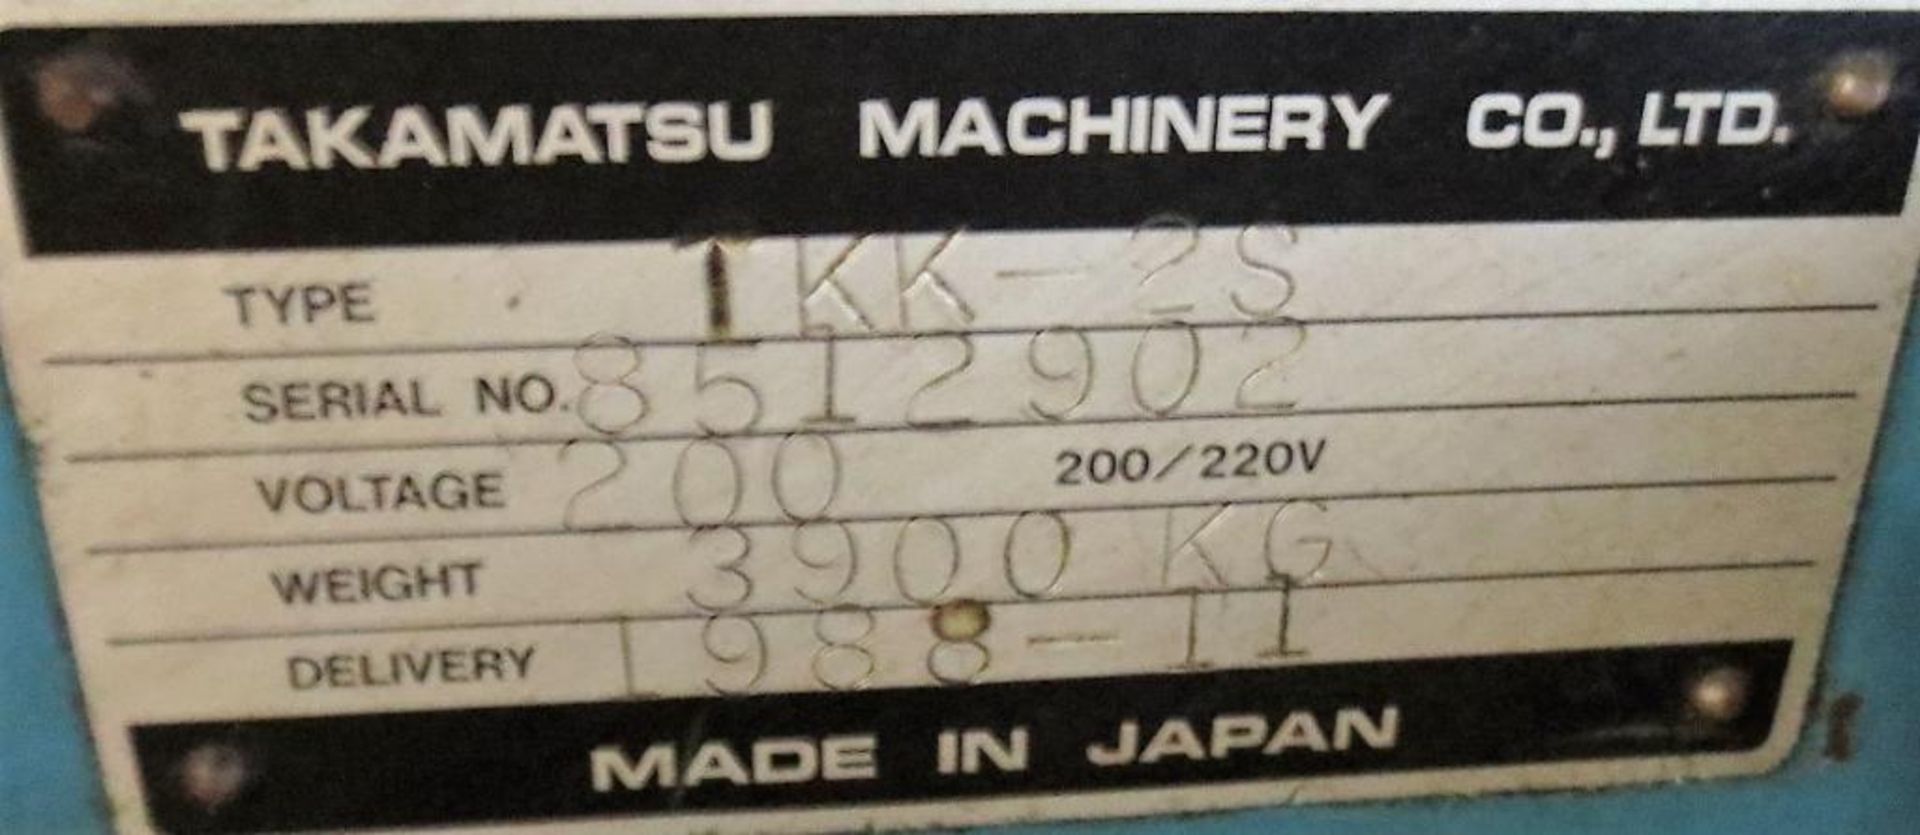 Takamatsu Model TKK-2S Spindle CNC Chucker S/N: 8512-902 Fanuc 10T CNC Control. Loading Fee is $350. - Image 3 of 10